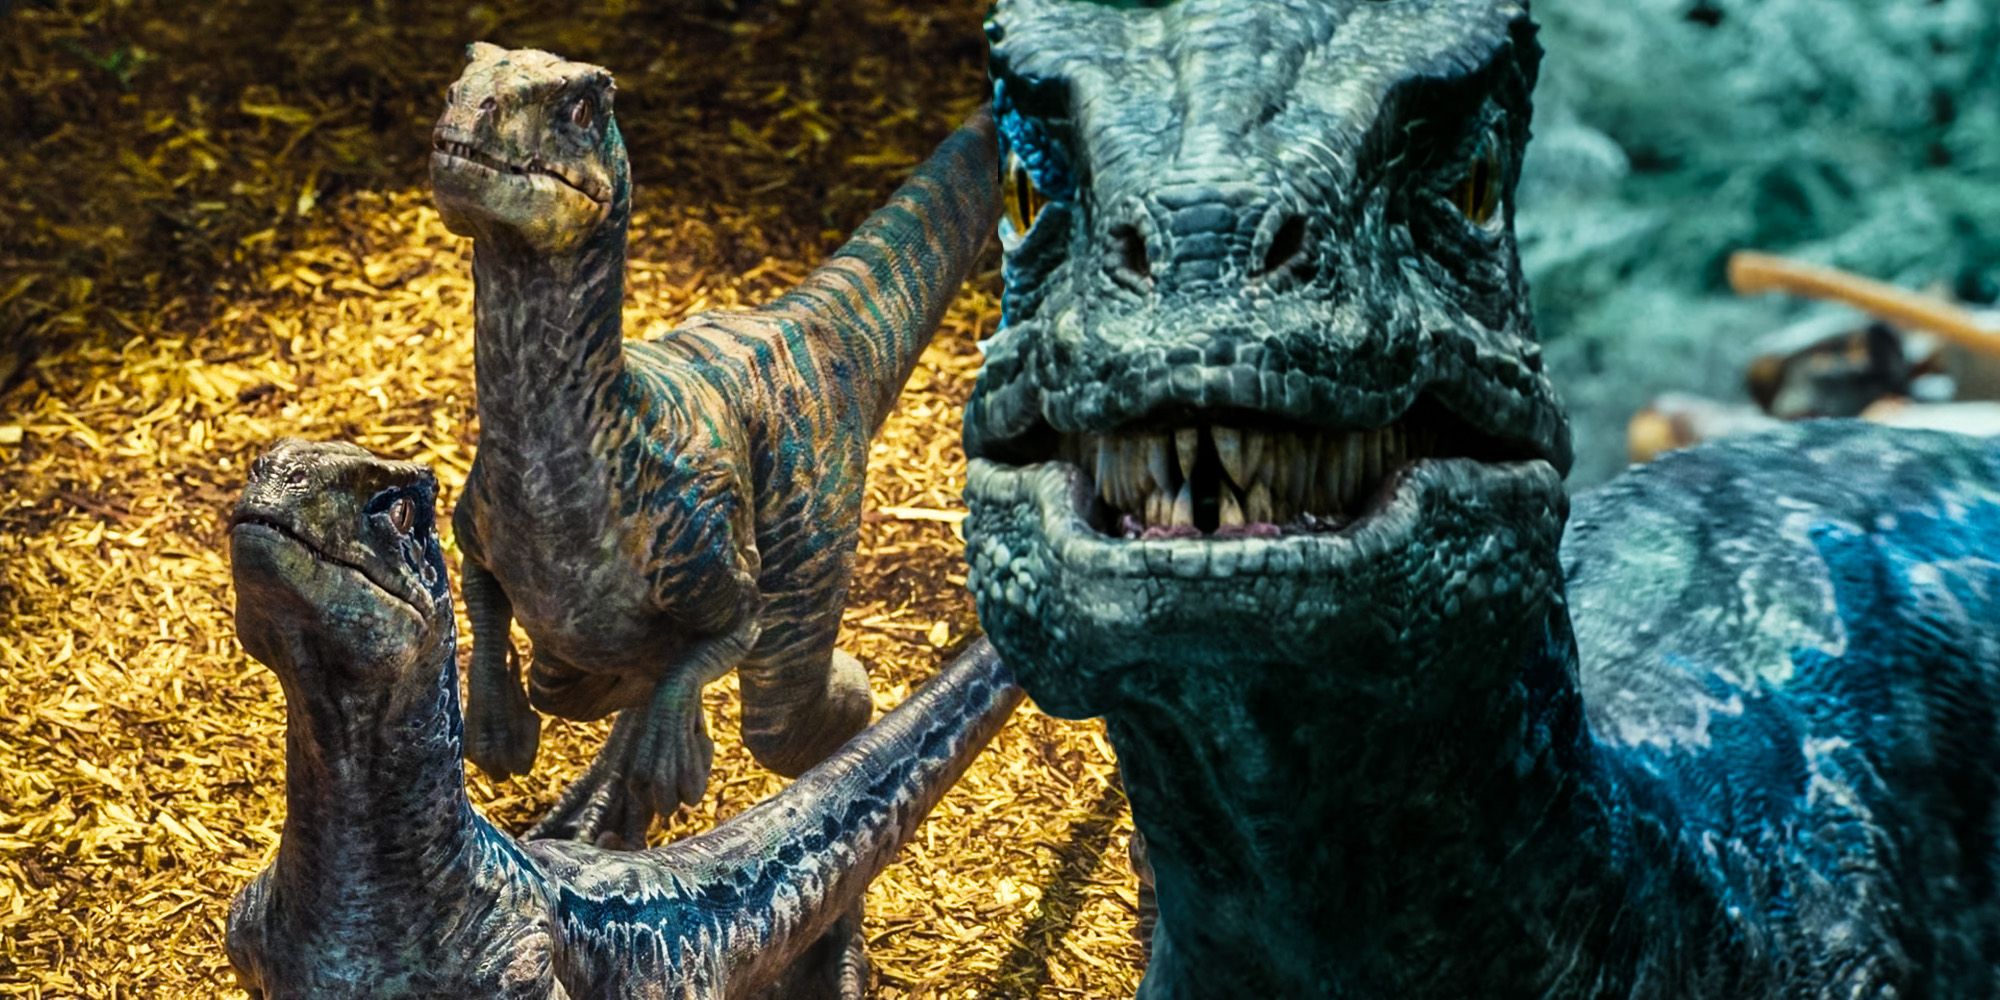 Jurassic world blue betrays jurassic park